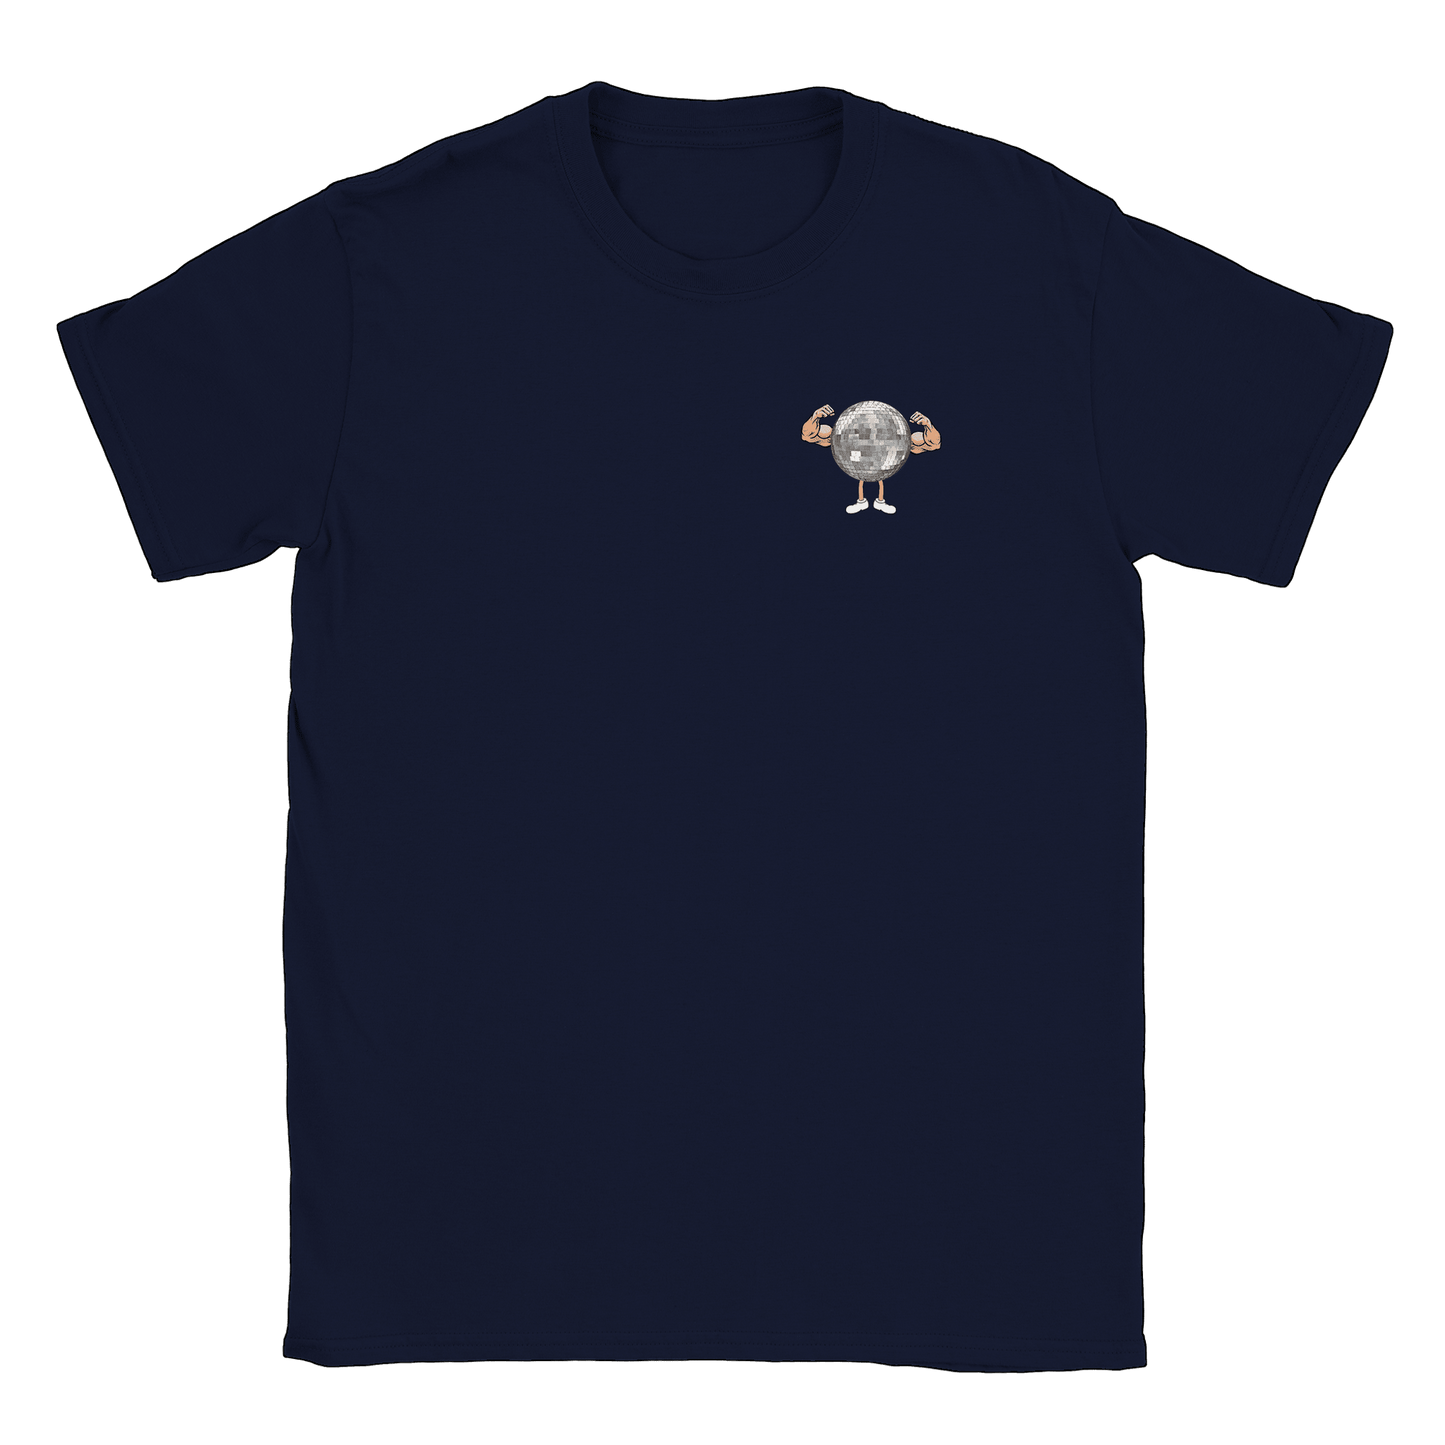 Den lille Discogymmaren - T-shirt Navy